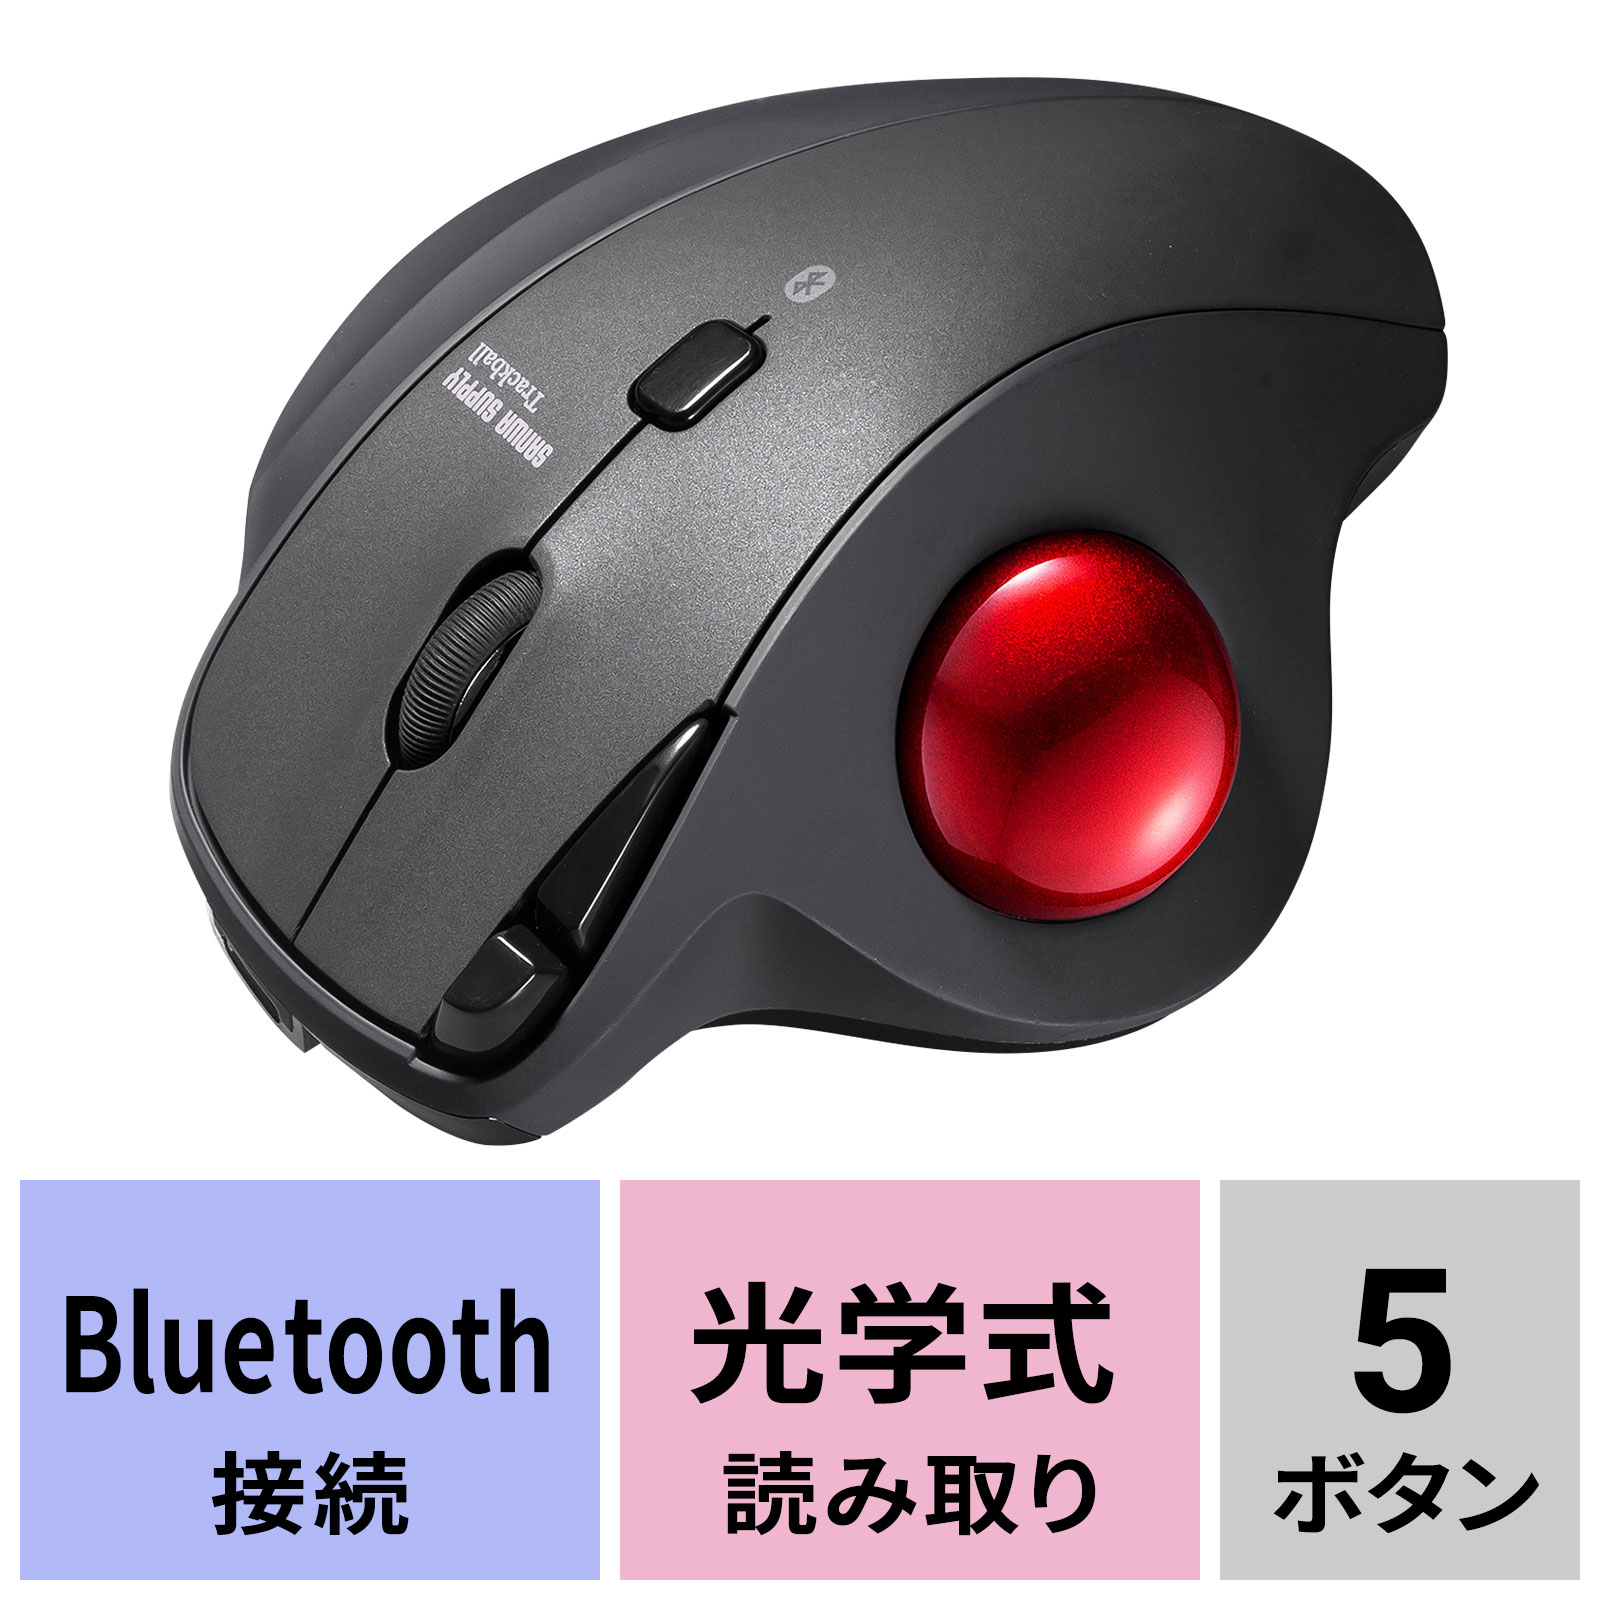 Bluetoothトラックボール 静音 5ボタン 親指操作タイプ（MA-BTTB186BK）